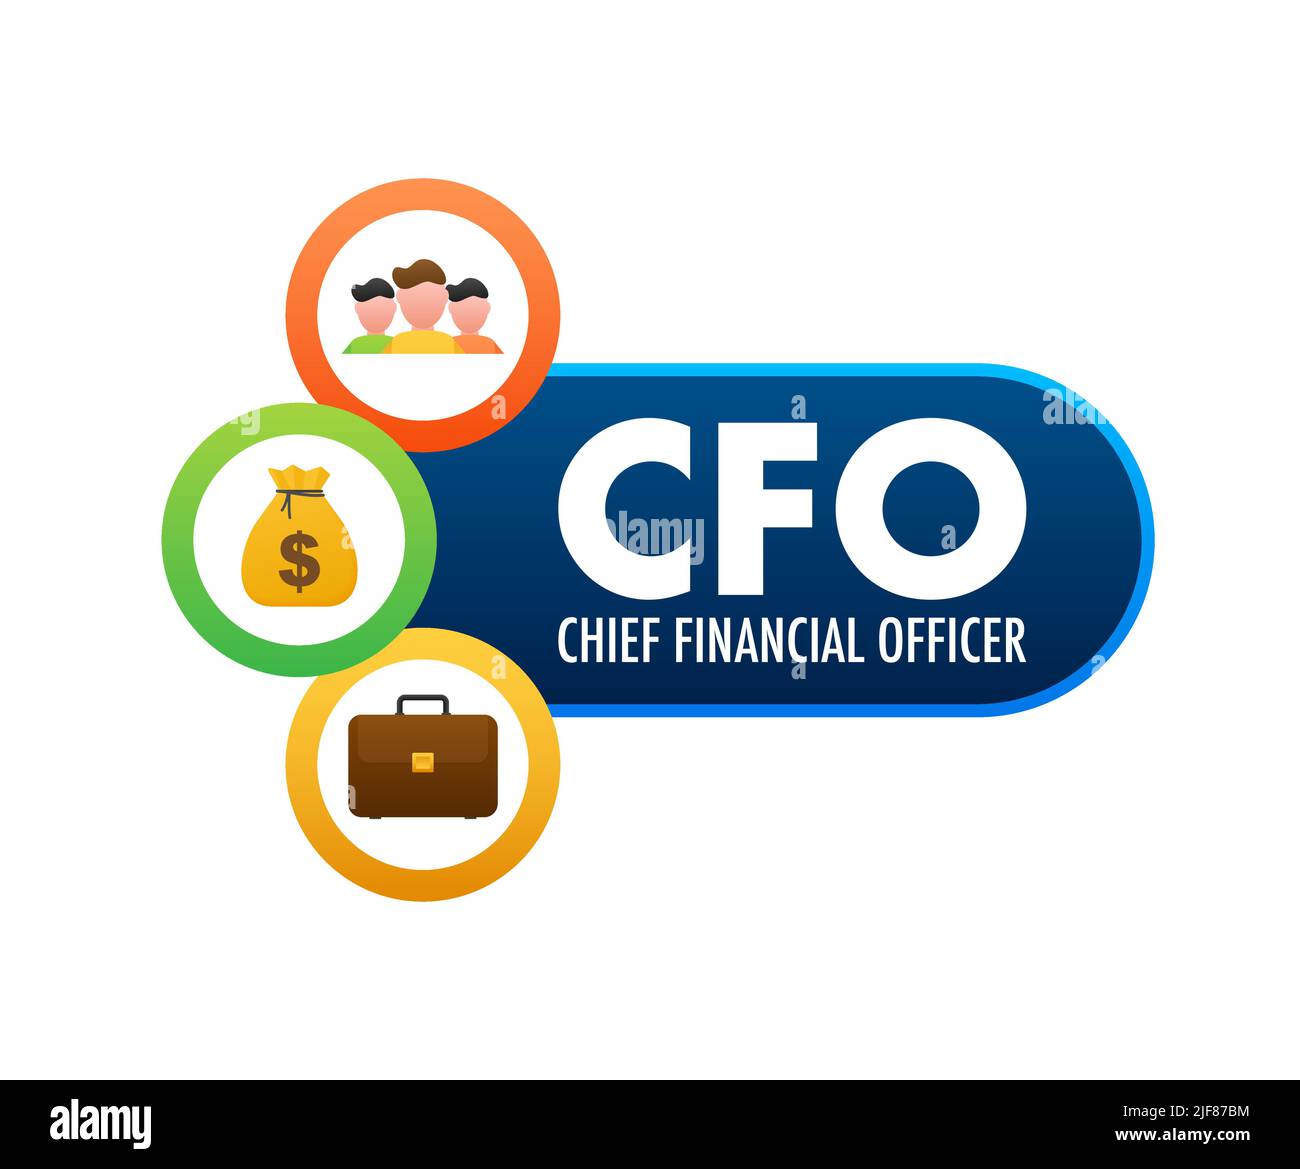 CFO - Chief Financial Officer. Senior manager responsible. Vector stock illustration. Stock Vector